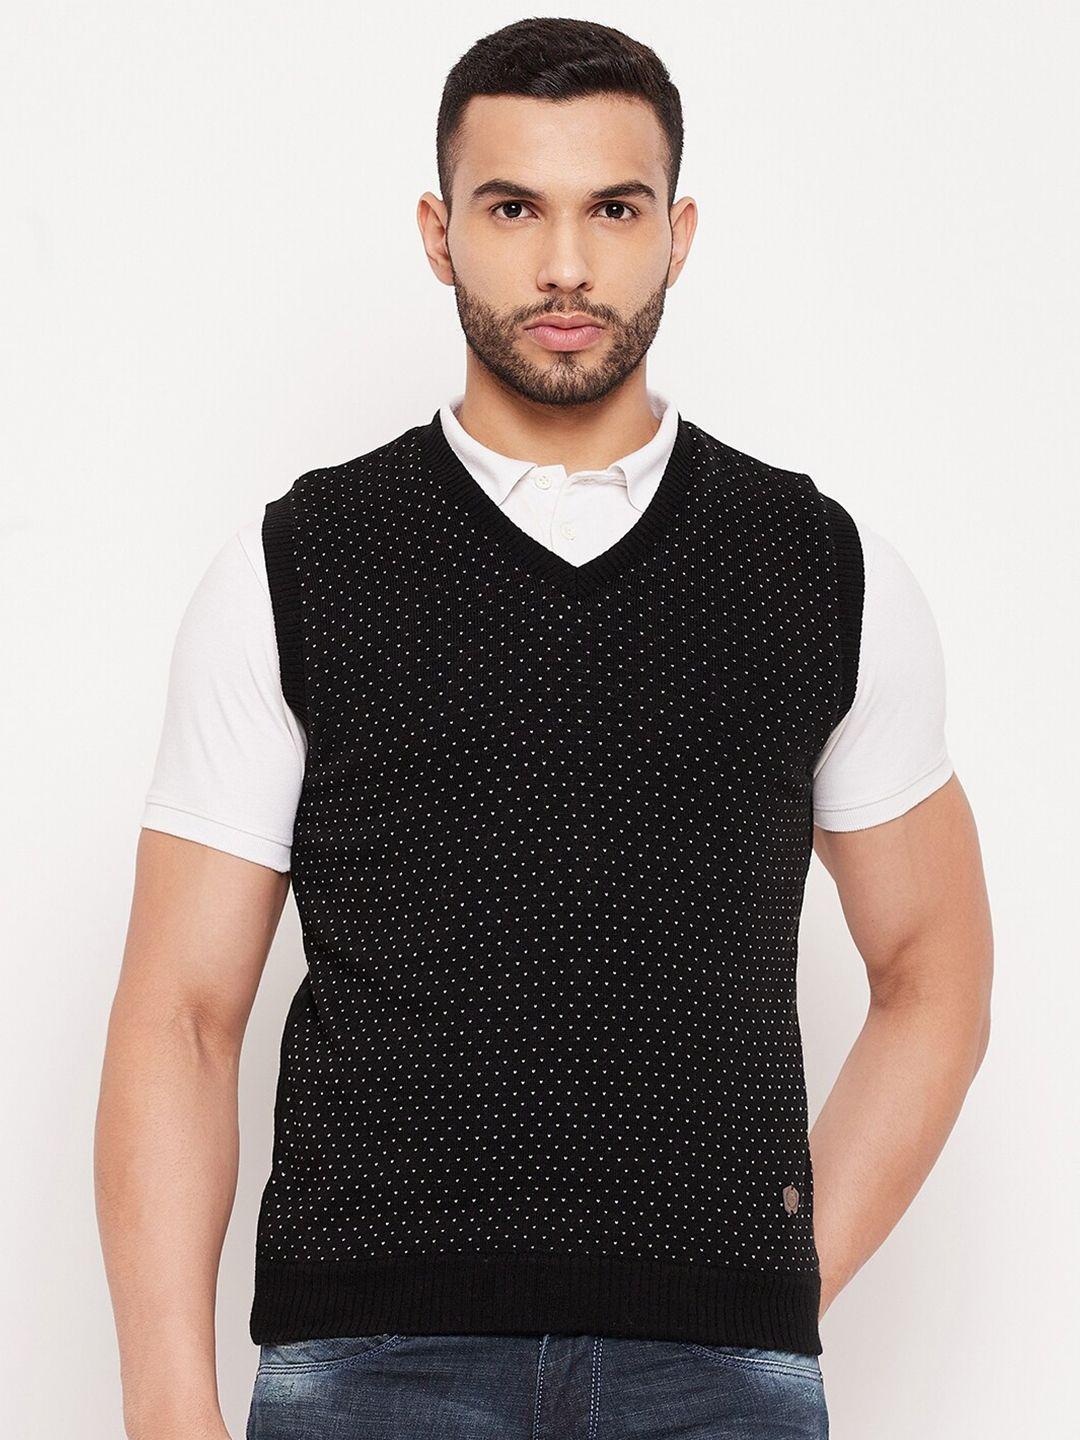 duke men black & white geometric printed sweater vest